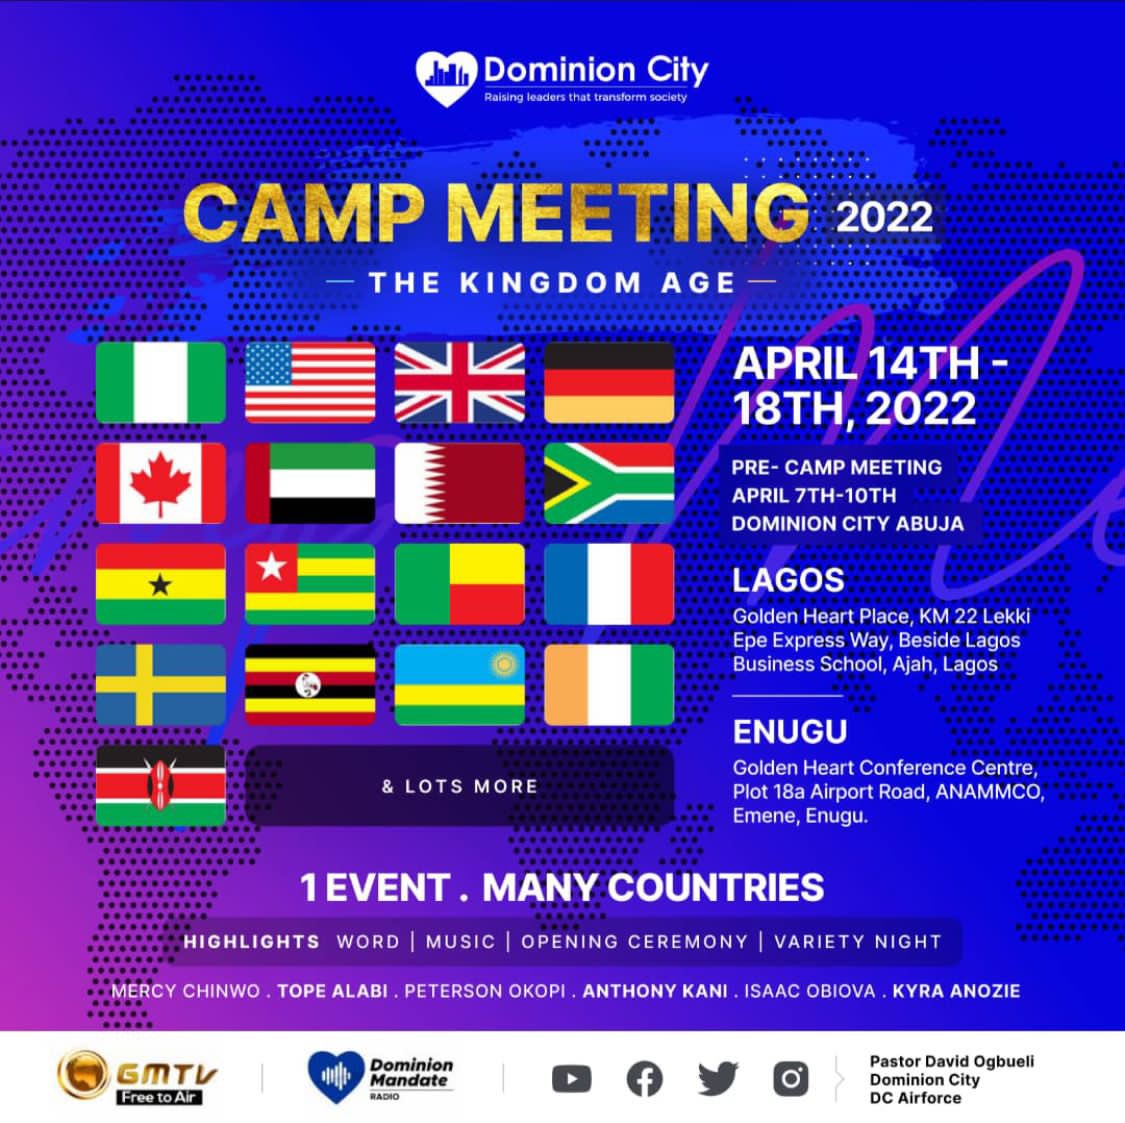 #campmeeting
#campmeeting2022
#revdavidogbueli